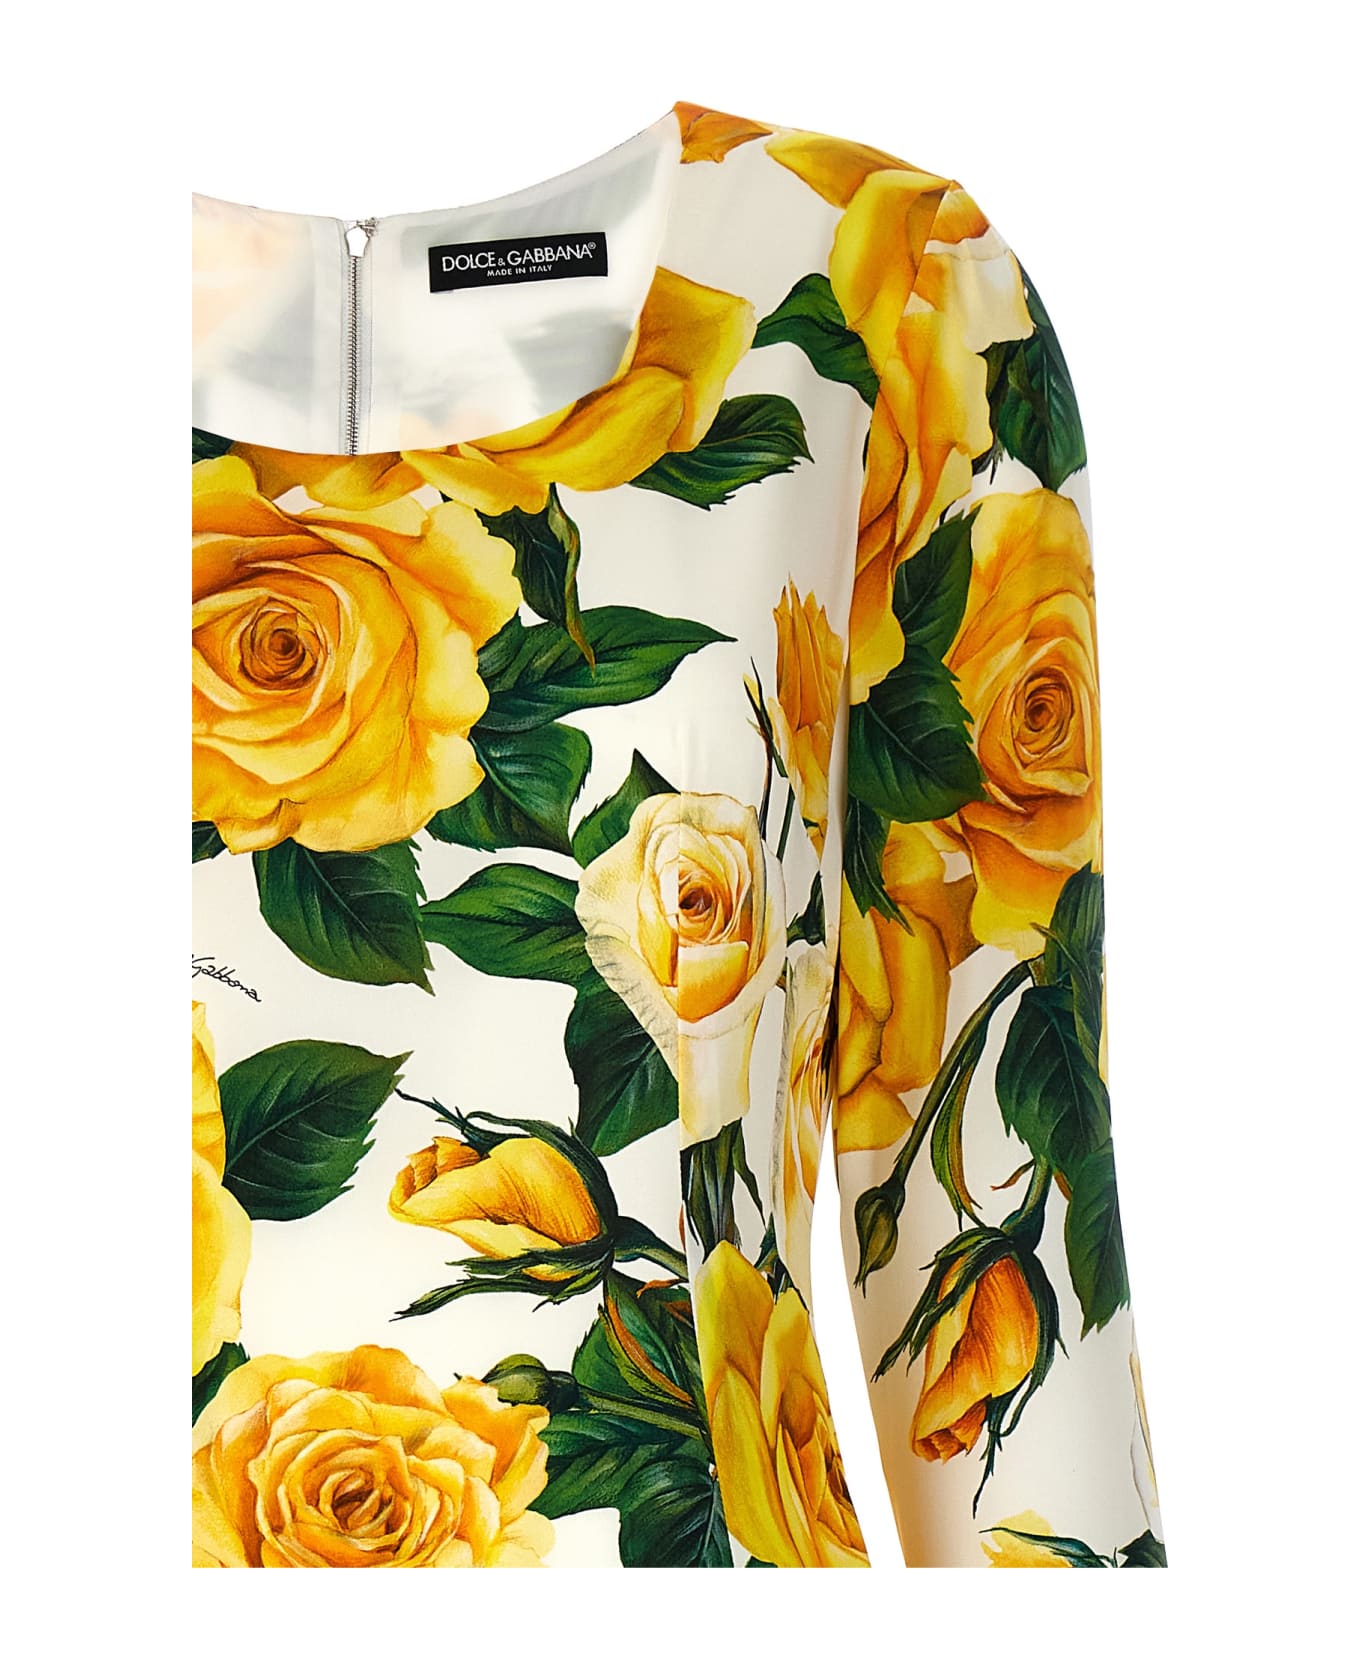 Dolce & Gabbana 'rose Gialle' Midi Dress - Multicolor